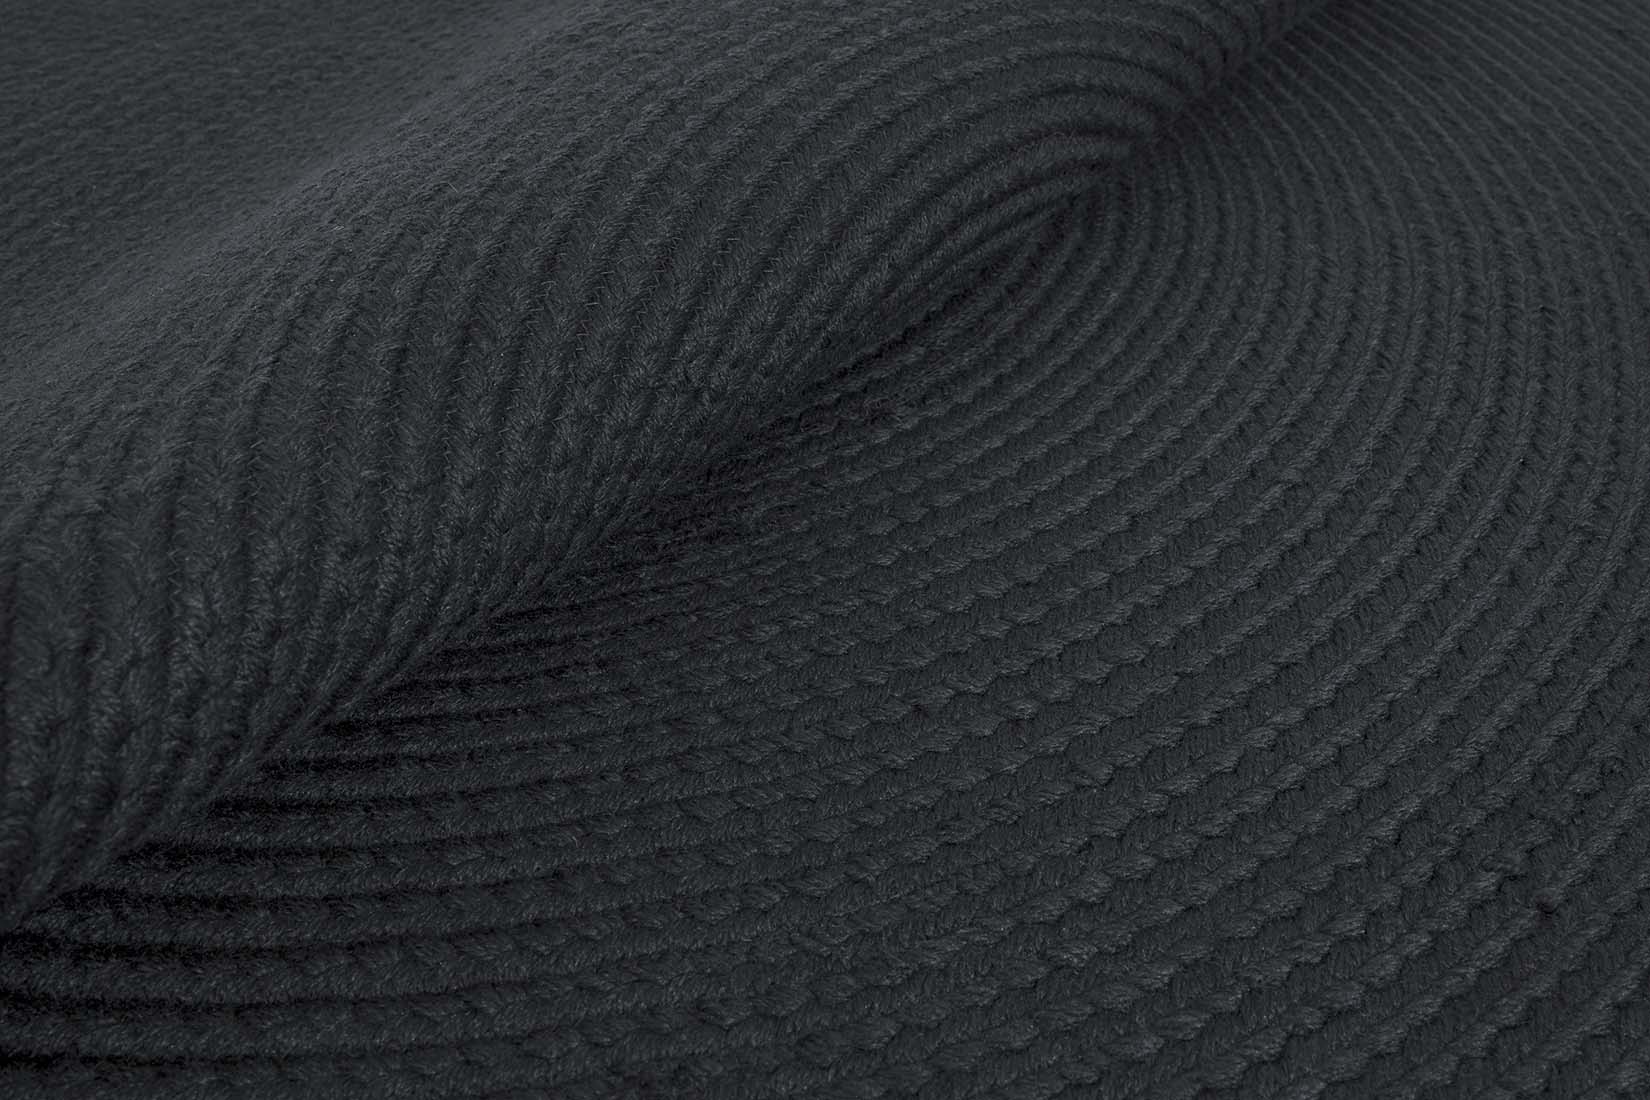 dark grey woven indoor/outdoor circle rug
